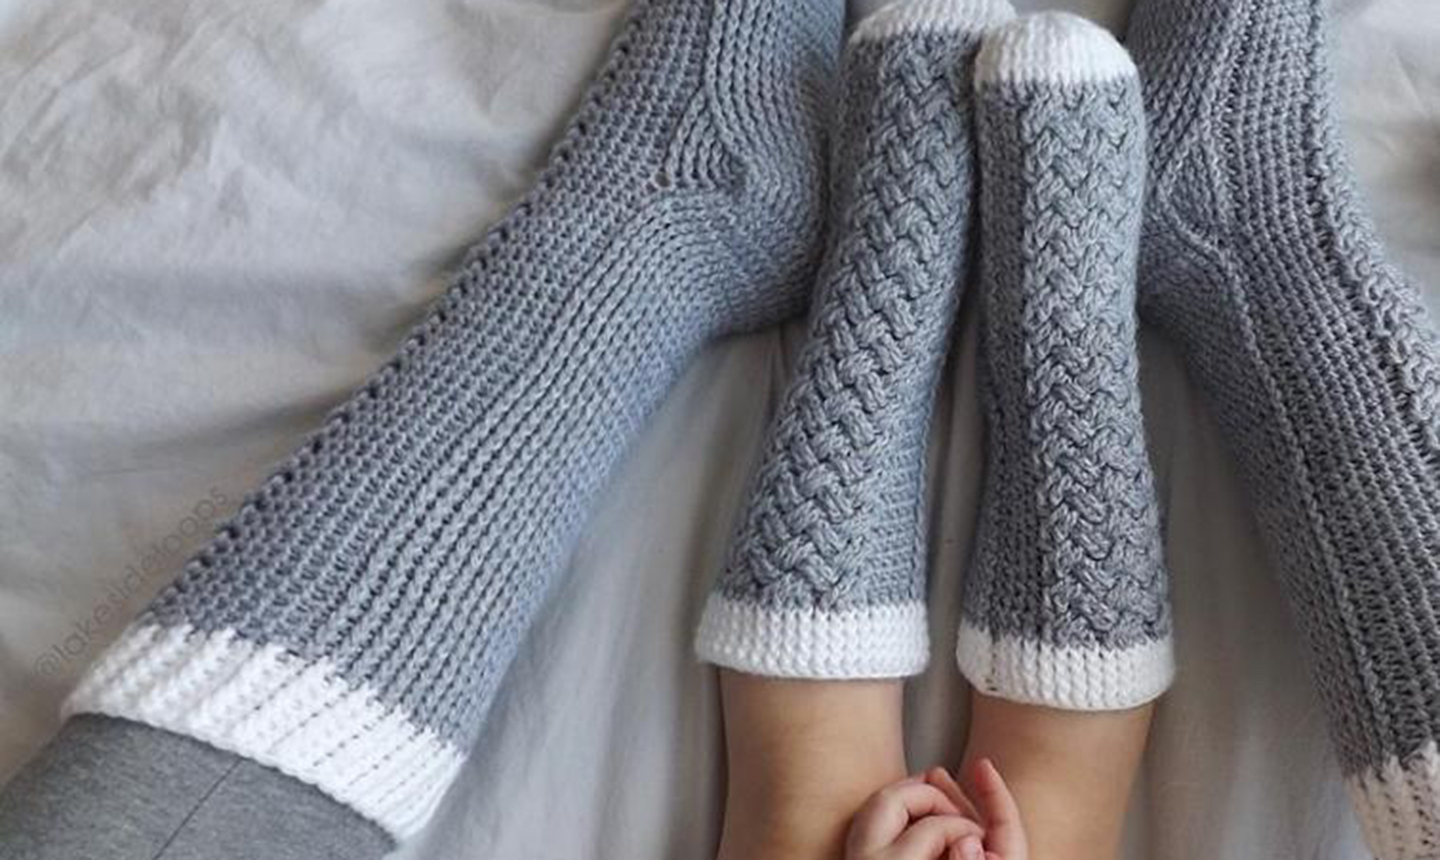 Crocheted grey and white socks 